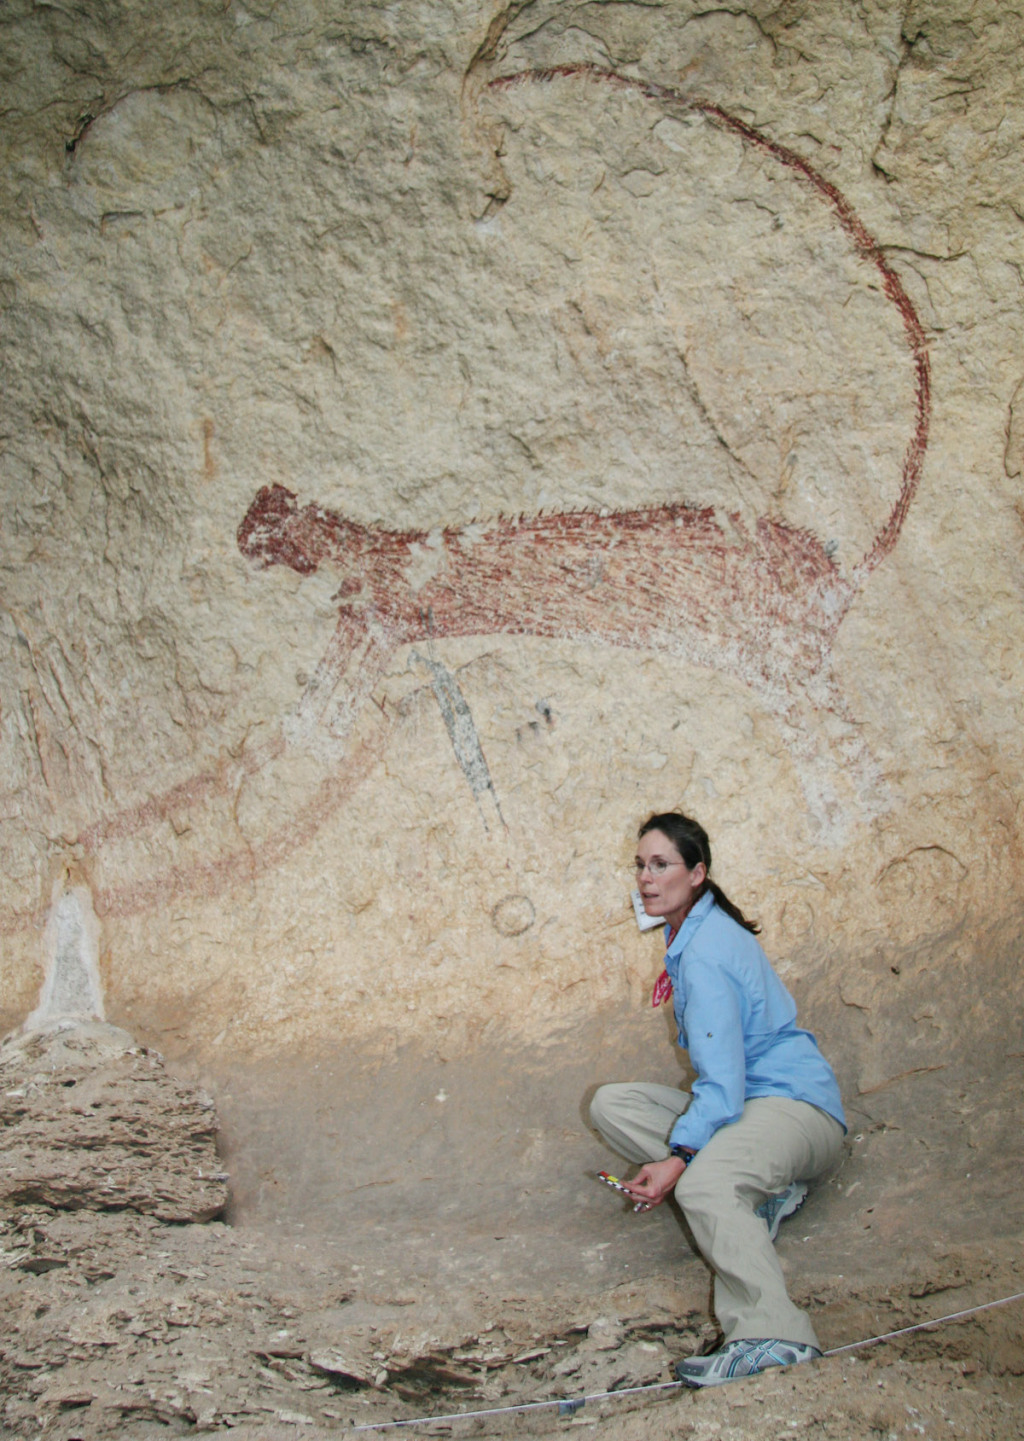 Rio Grande Murals Are Focus of Archaeological Research Effort – ARTnews.com